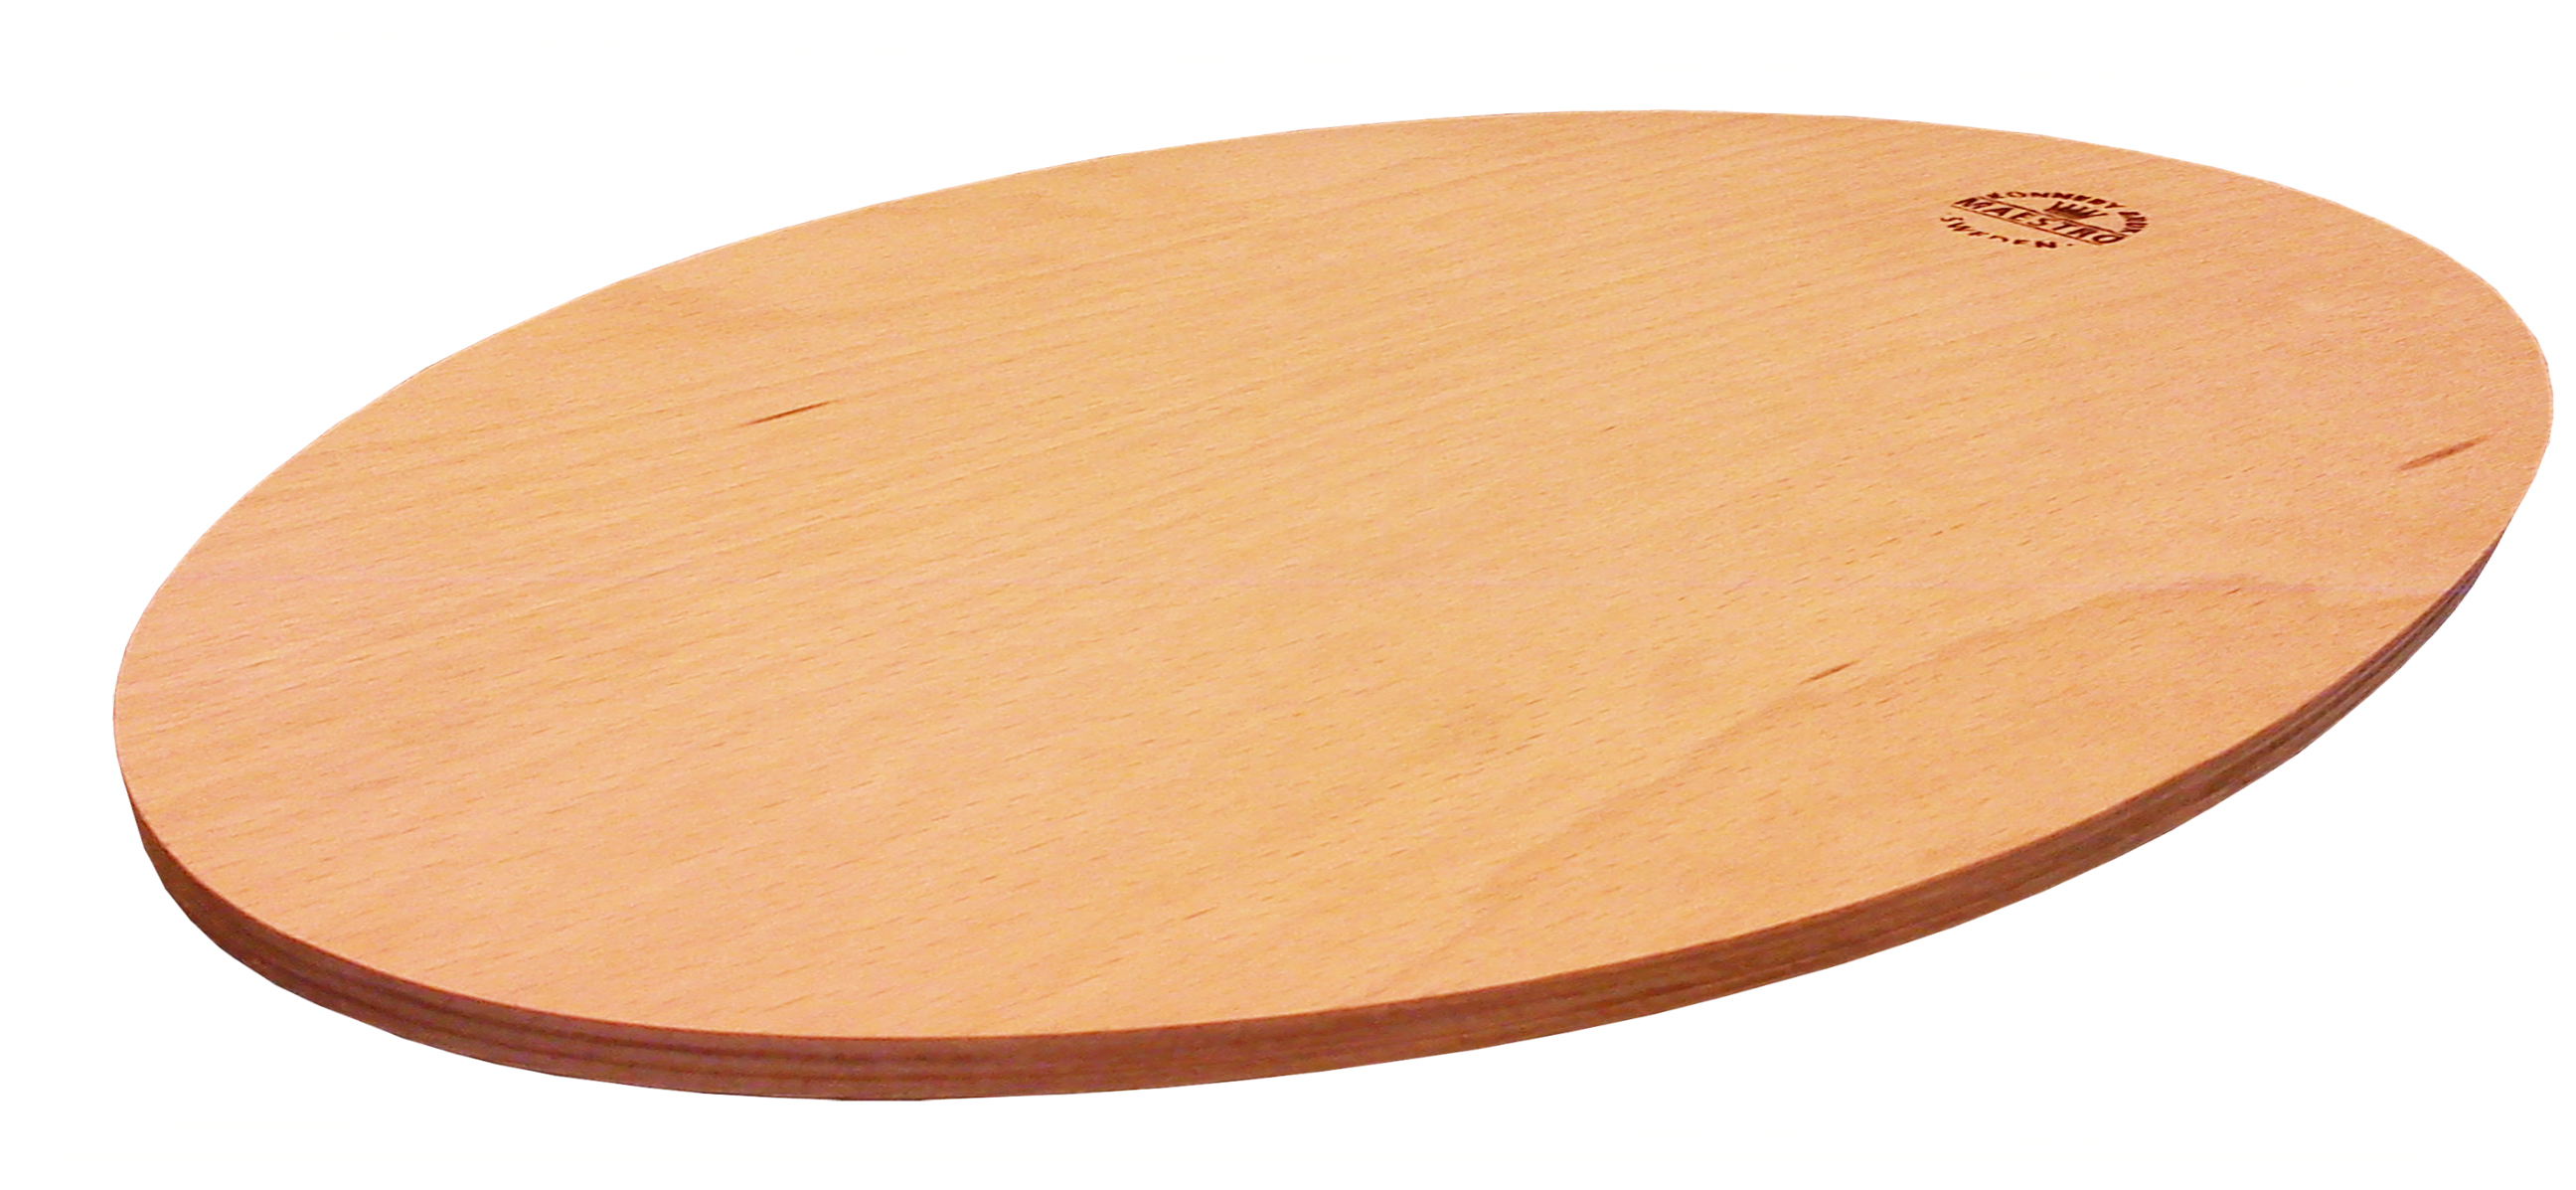 Oval wooden trivet 90192